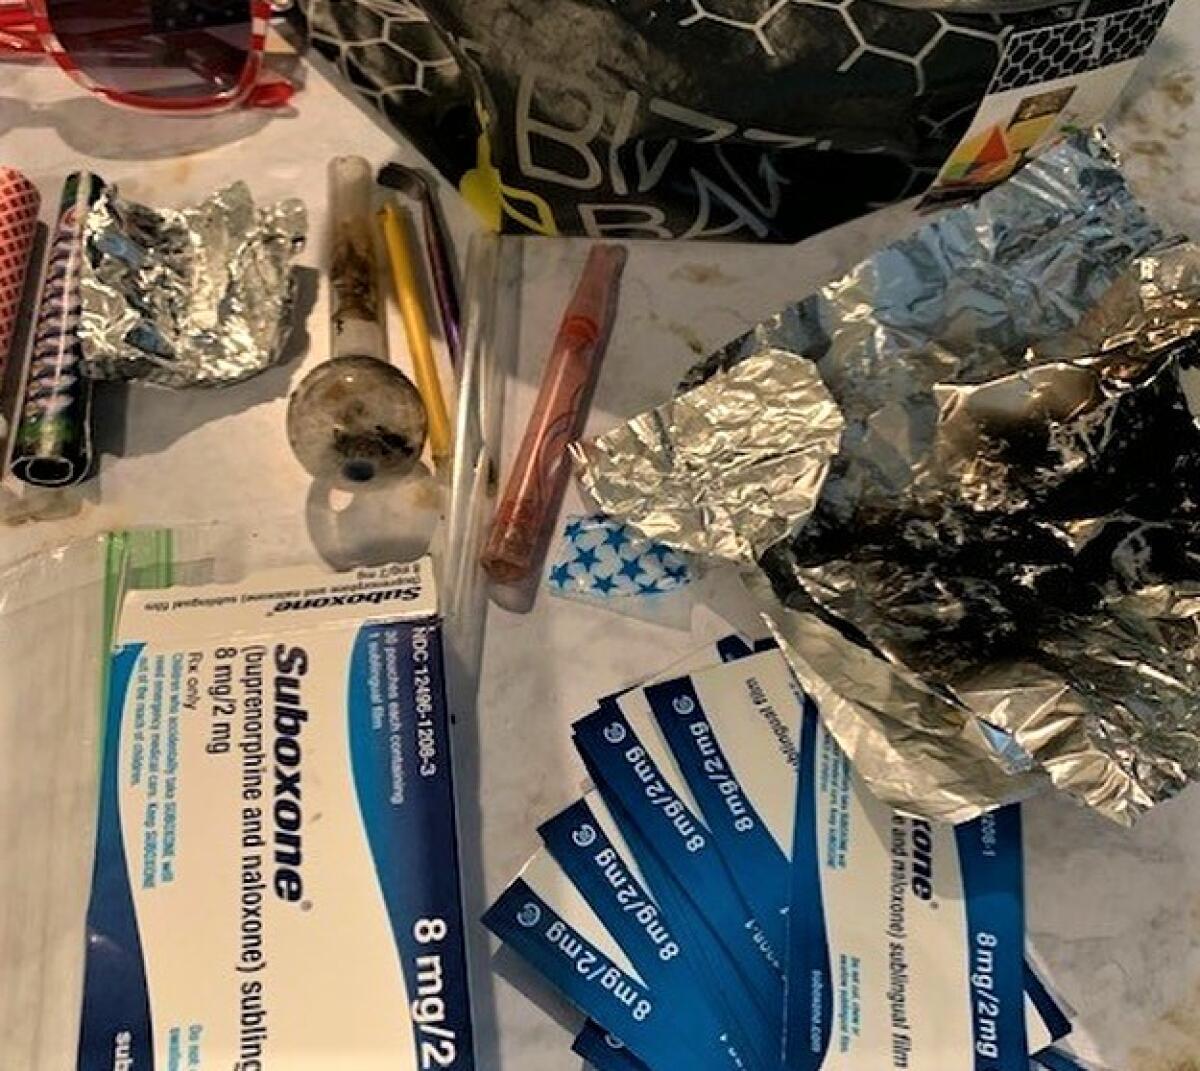 Costa Mesa police found prescription drugs, fentanyl and paraphernalia in a Huntington beach home where a child was living.